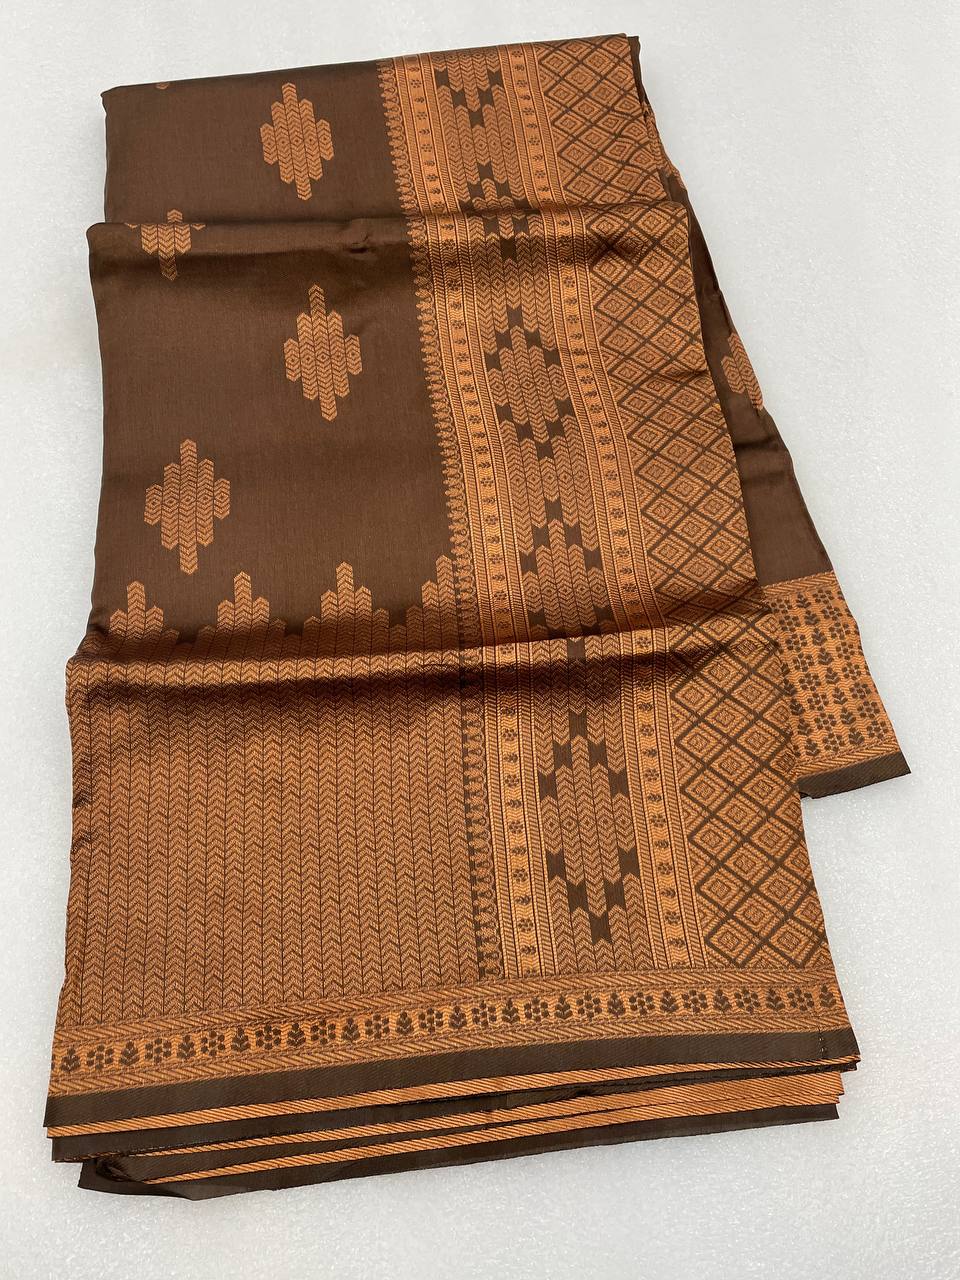 Stunning Brown Colour Saree With Heavy Brocade Blouse Banarasi Beautiful Zari Work In Form Of Traditional Motifs Soft Silk Saree